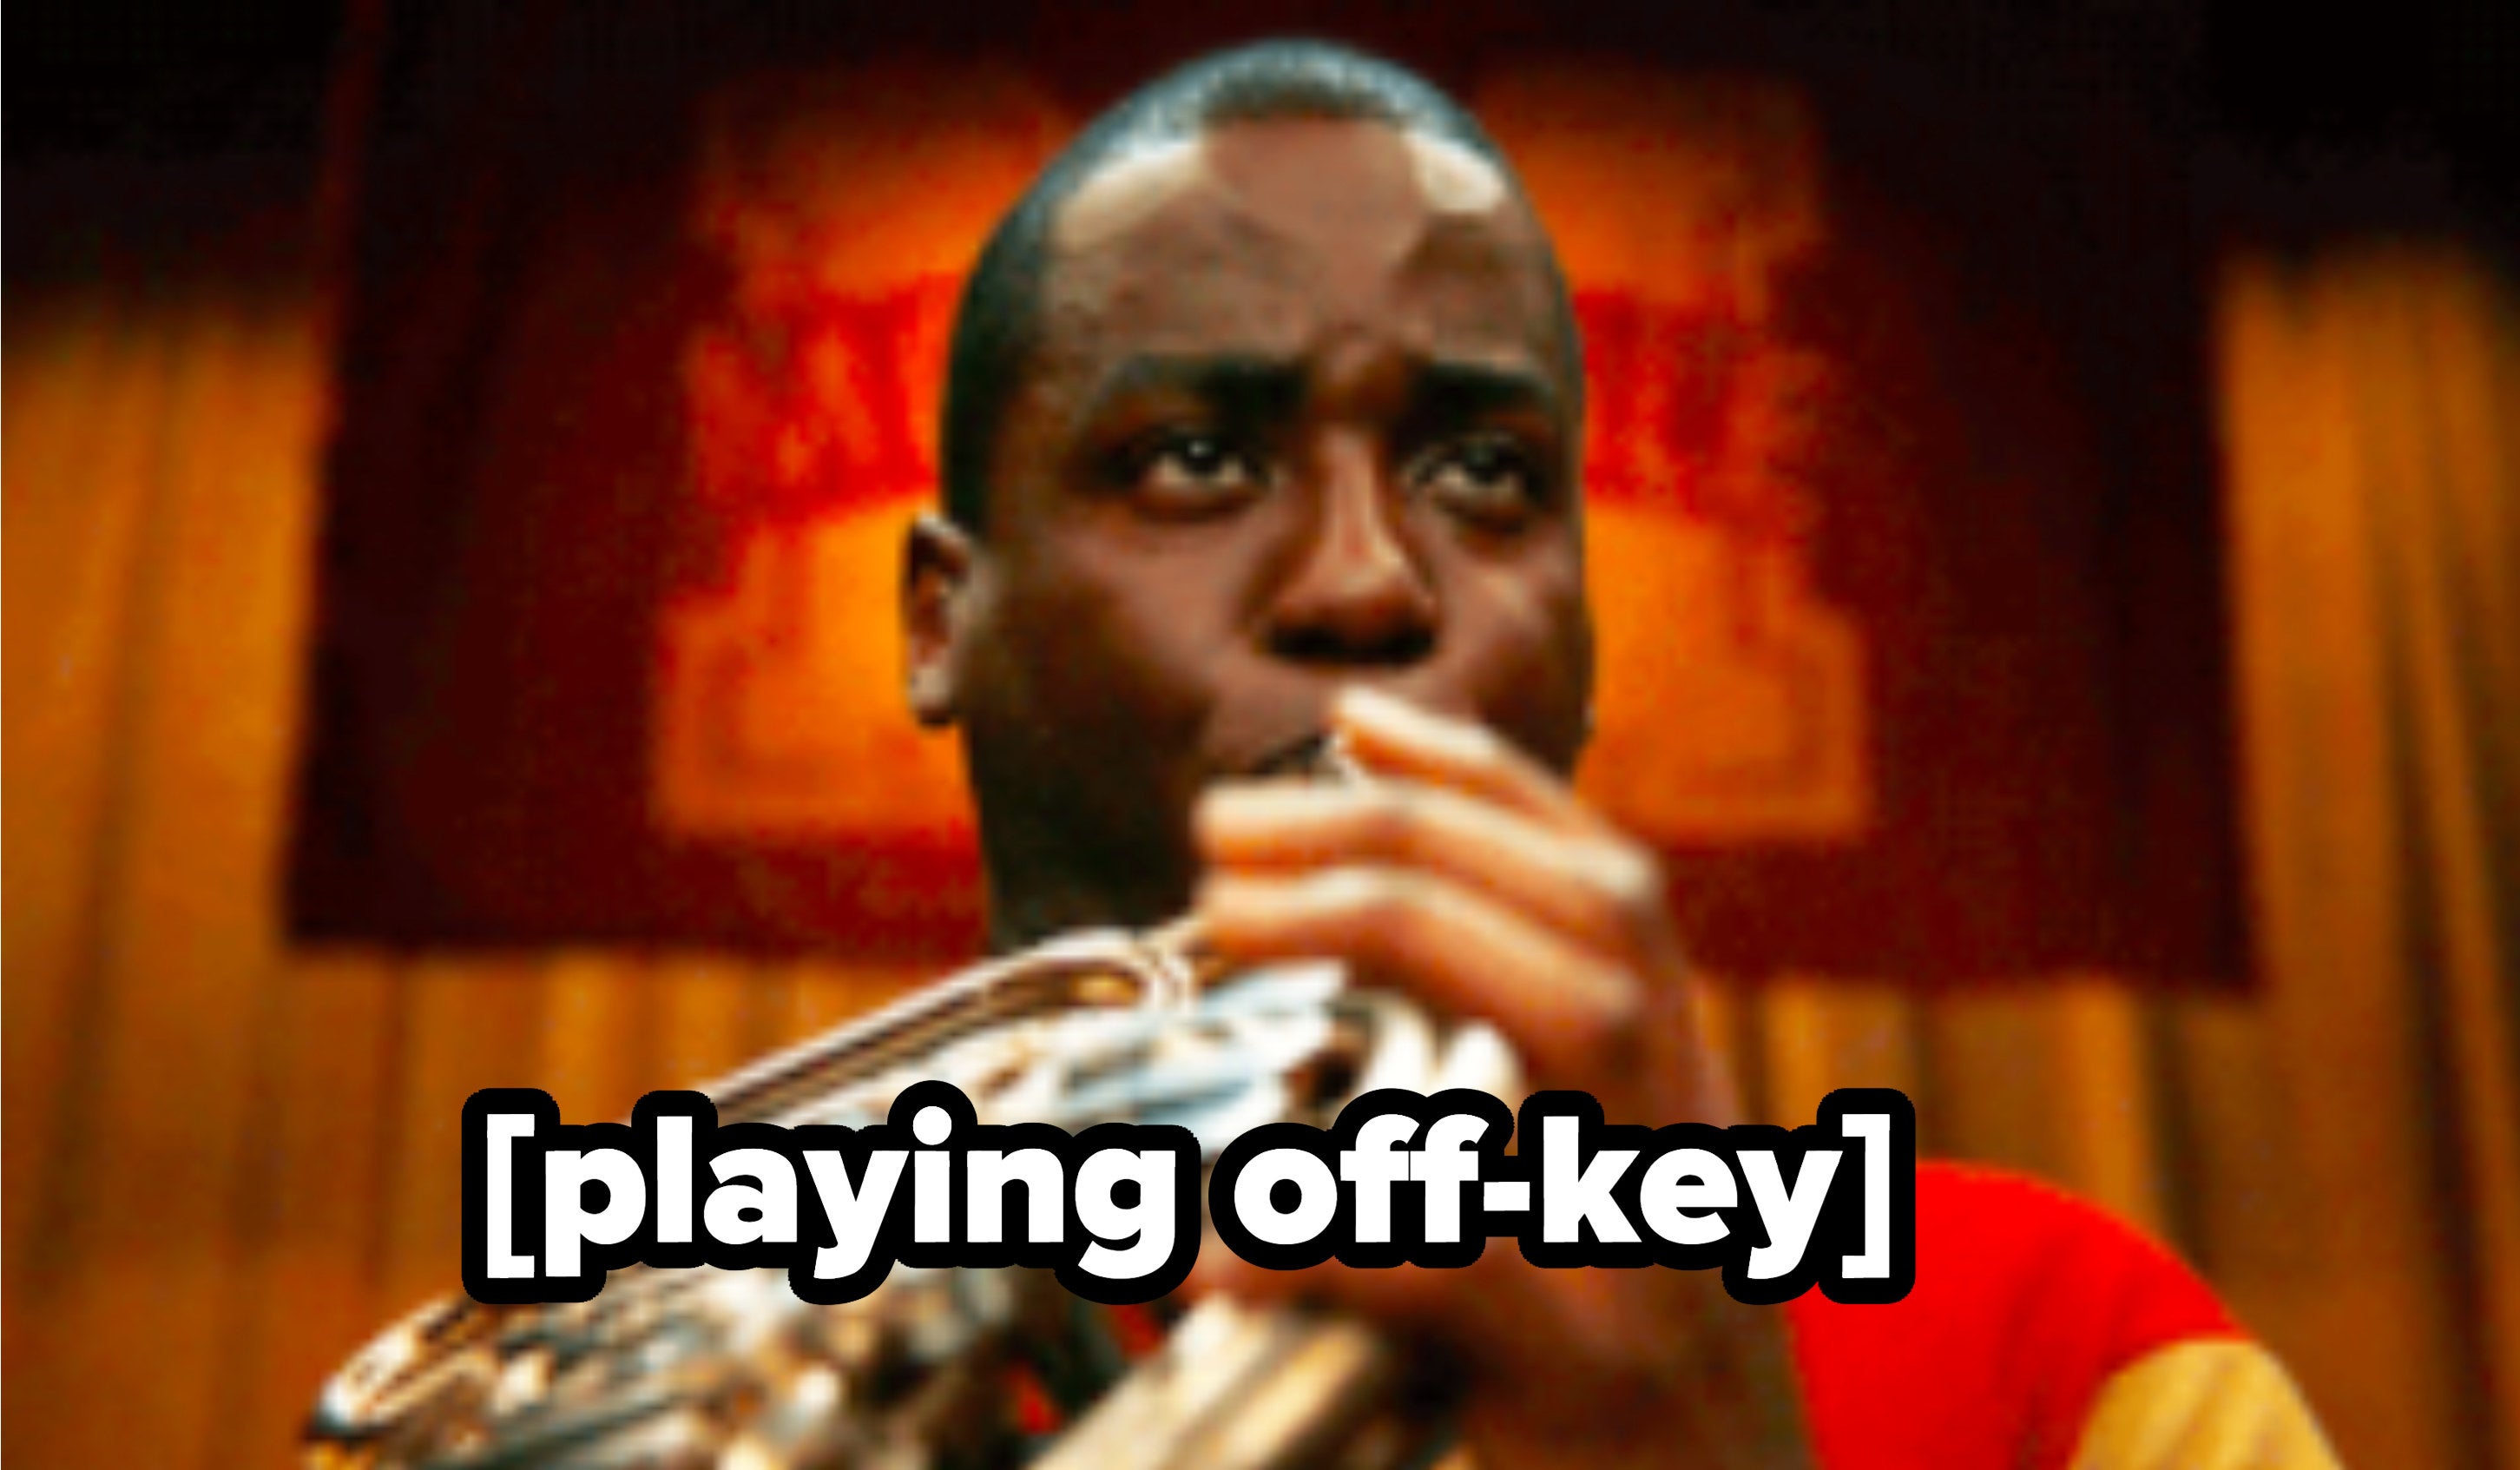 Eric plays trombone off-key